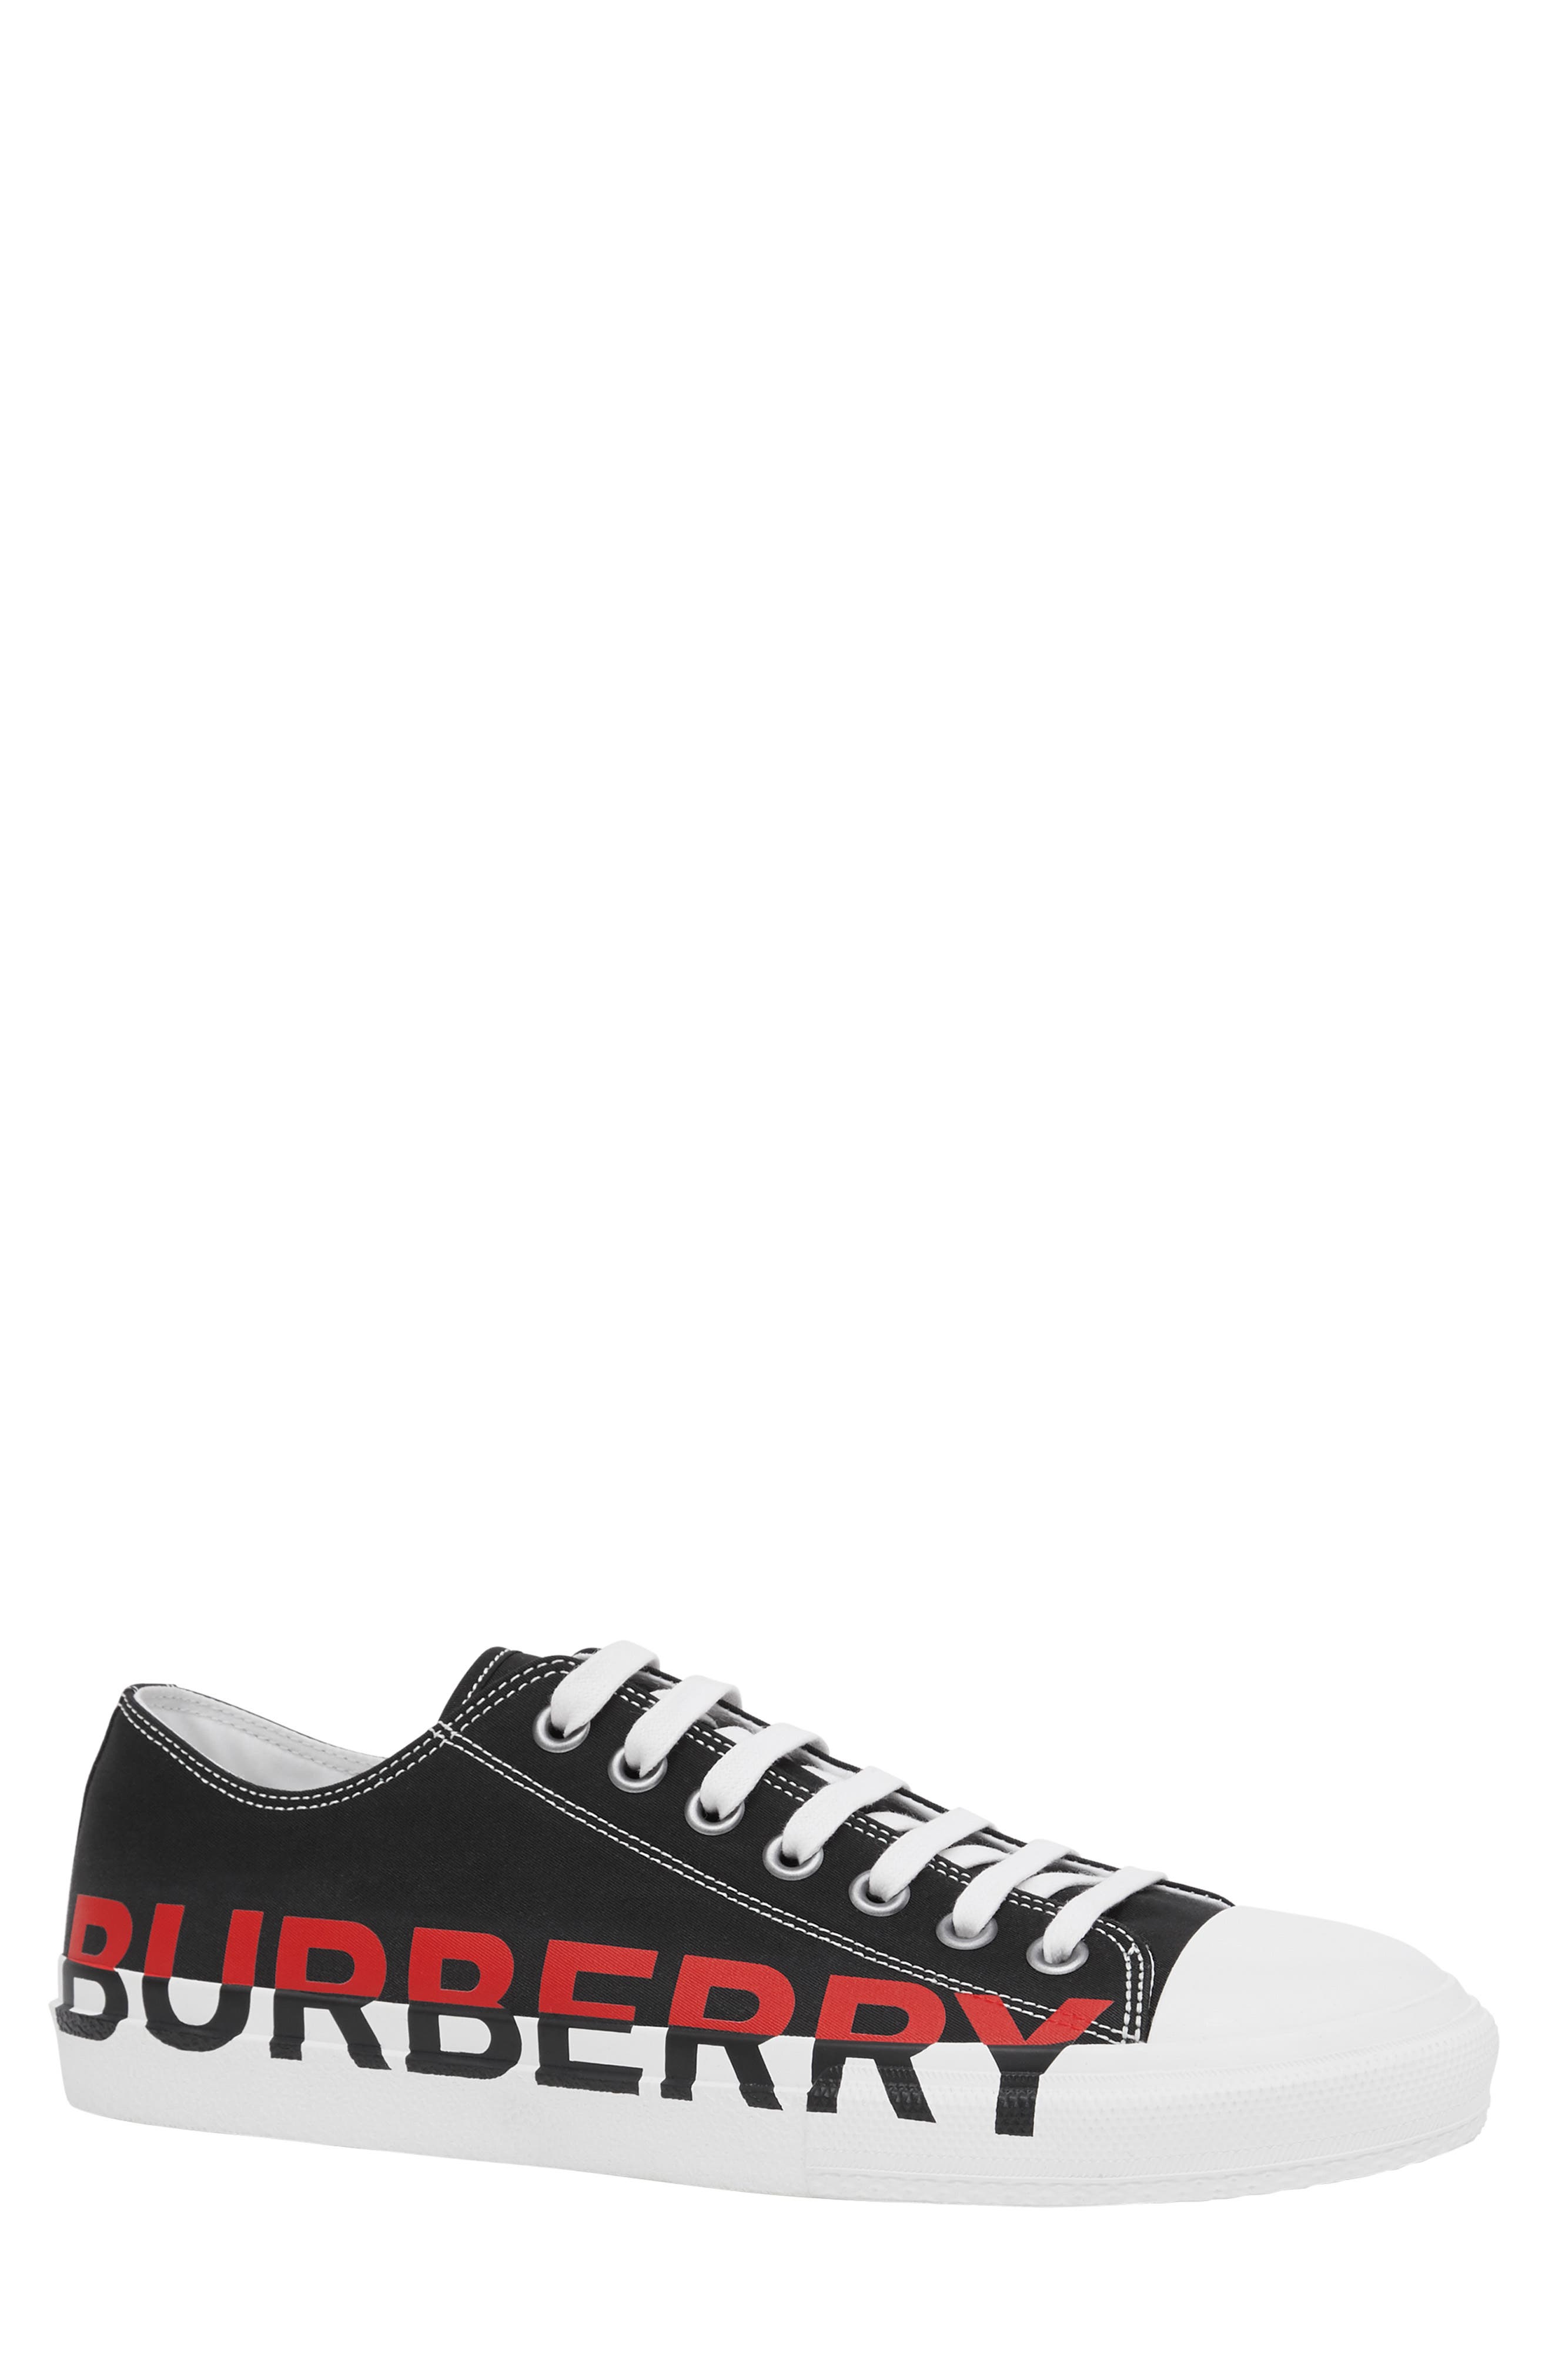 Burberry Shoes Black Top Sellers, 56% OFF | www.ingeniovirtual.com